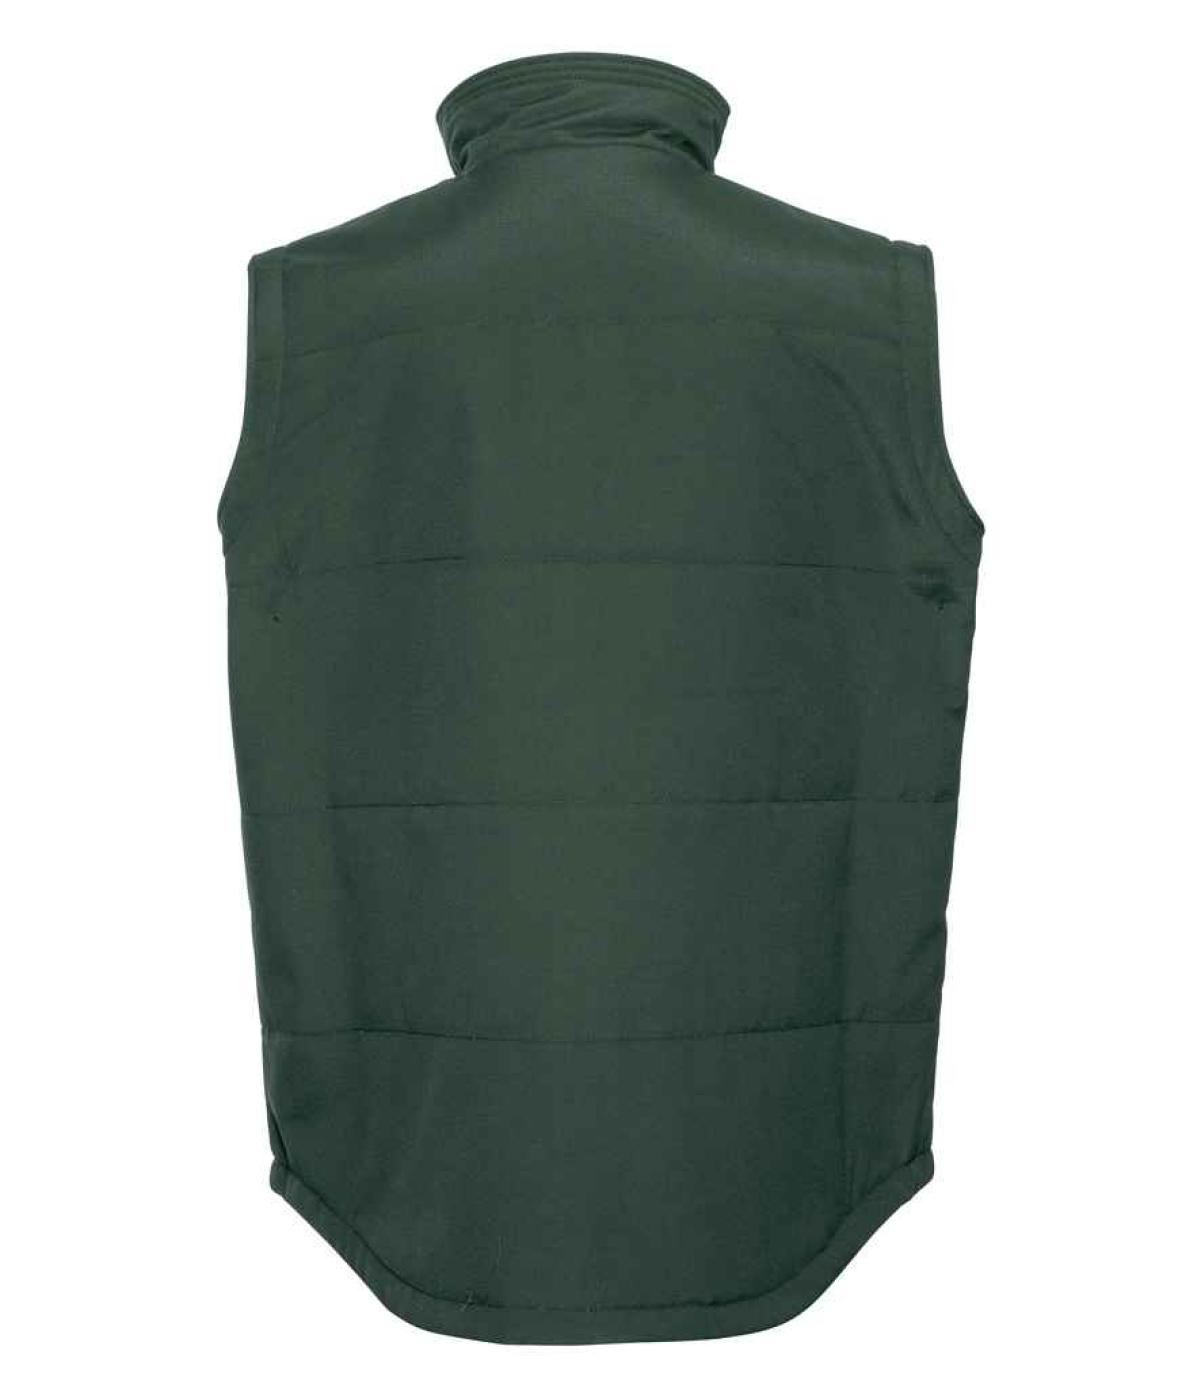 Russell Gilet - Bottle Green | Order Uniform UK Ltd